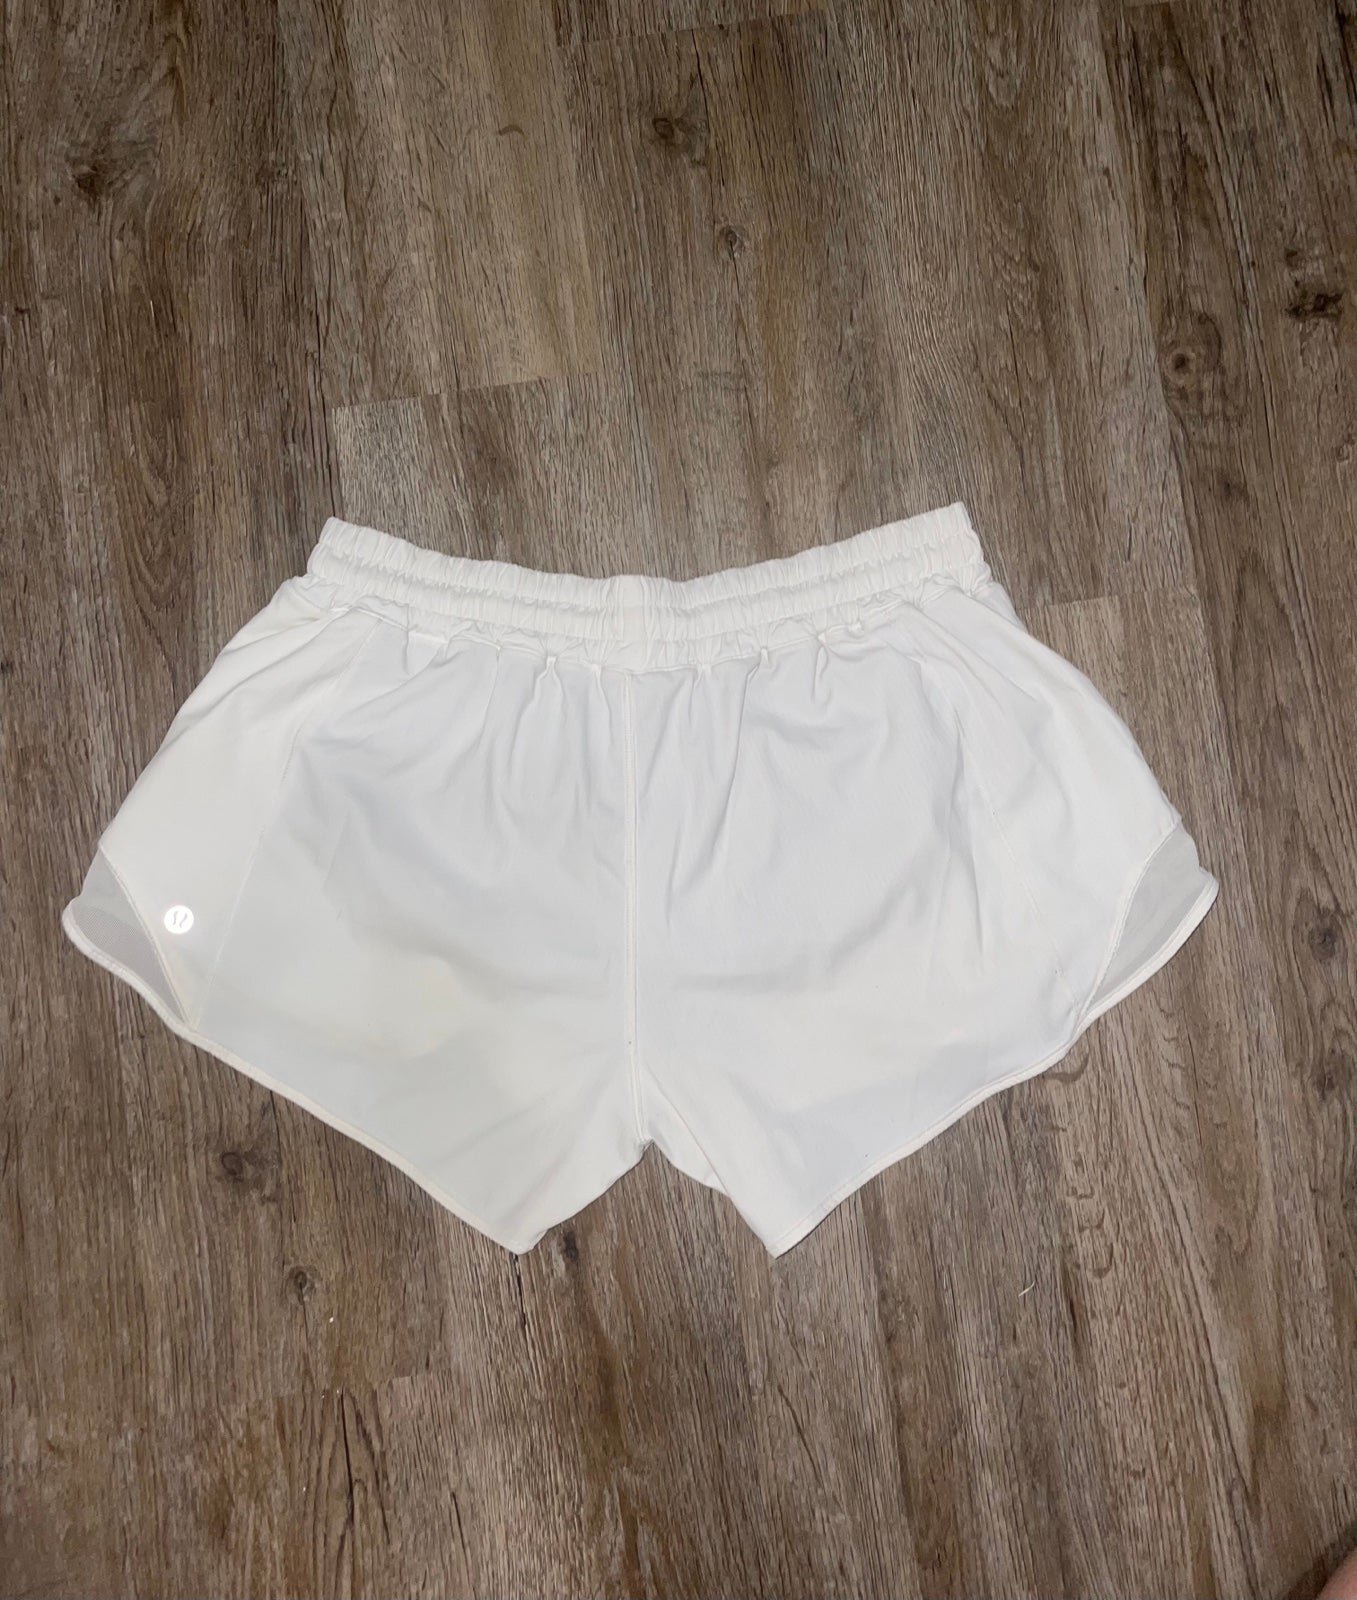 Popular White Lululemon Hotty Hot Shorts LR 4” Size 10 GwzusDkLp outlet online shop